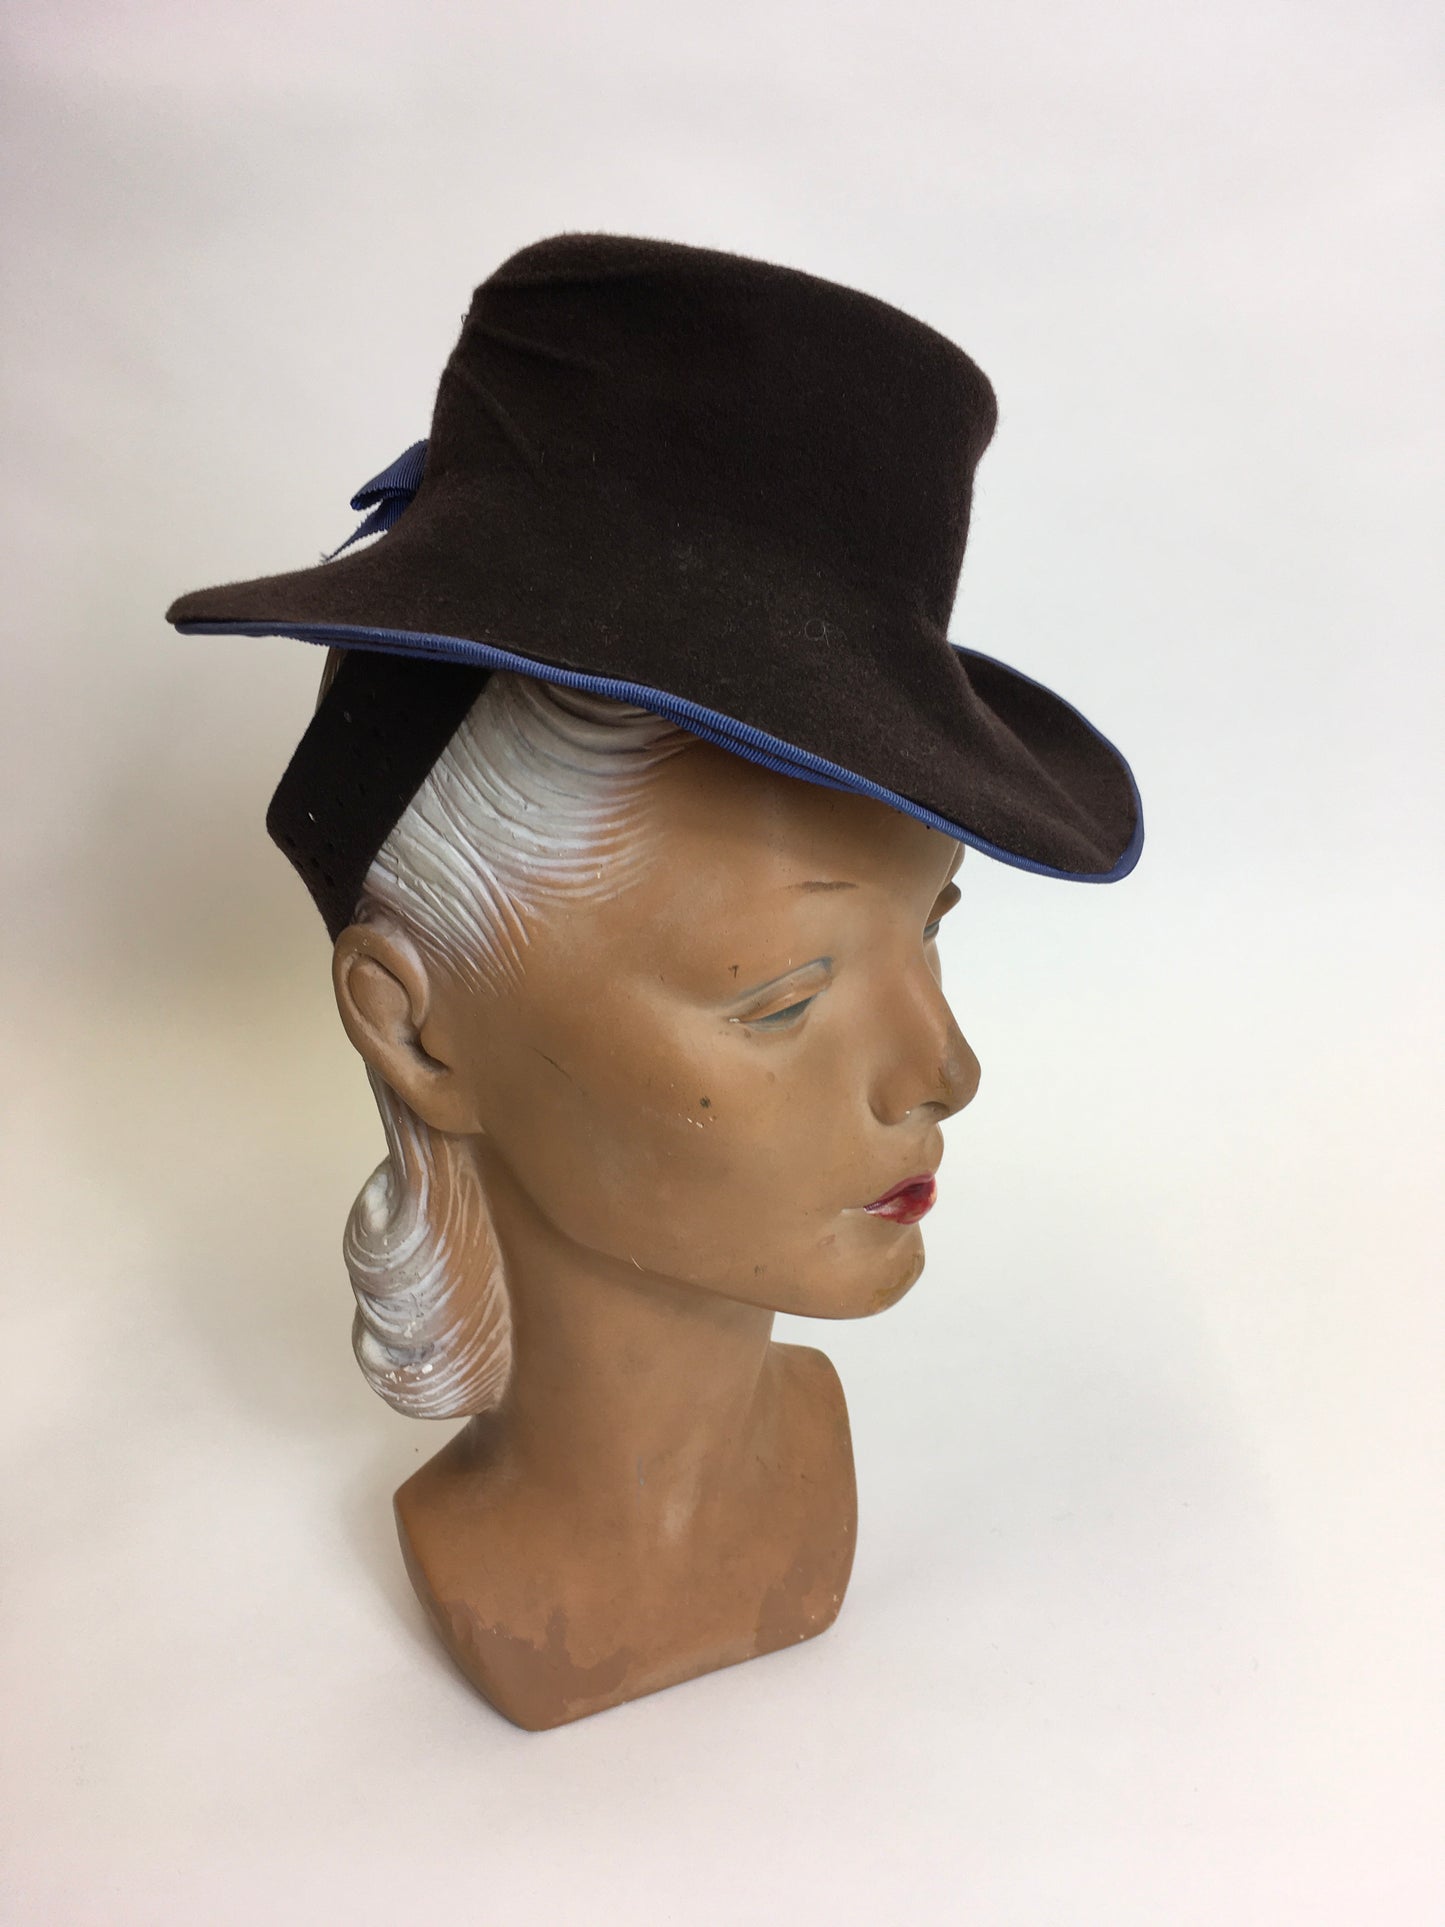 Original 1940’s Brown Felt Topper Hat - Adorned With A Powder Blue Bow